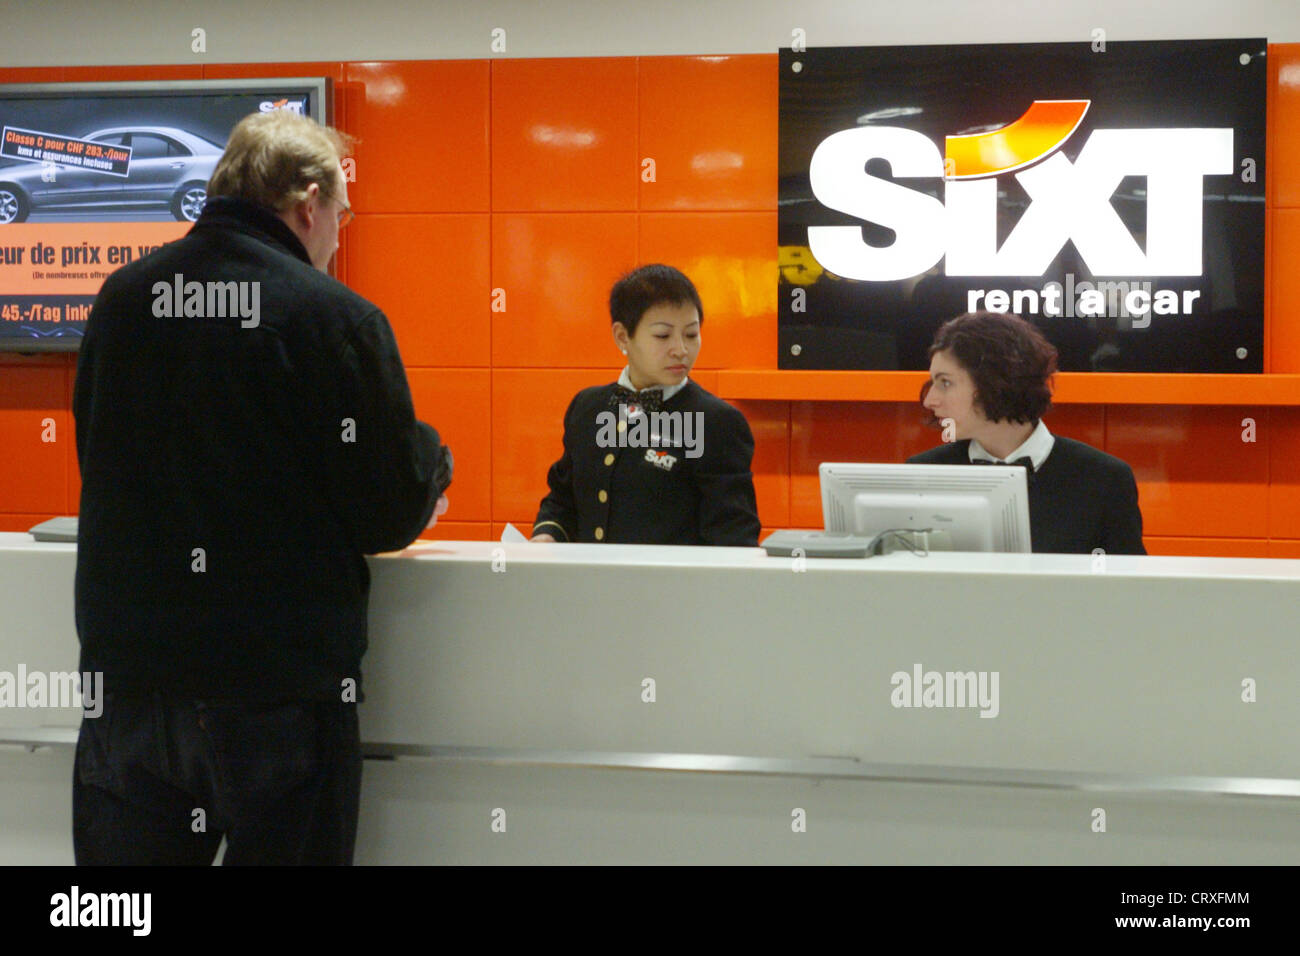 Sixt Rent A Car Counter Stock Photo